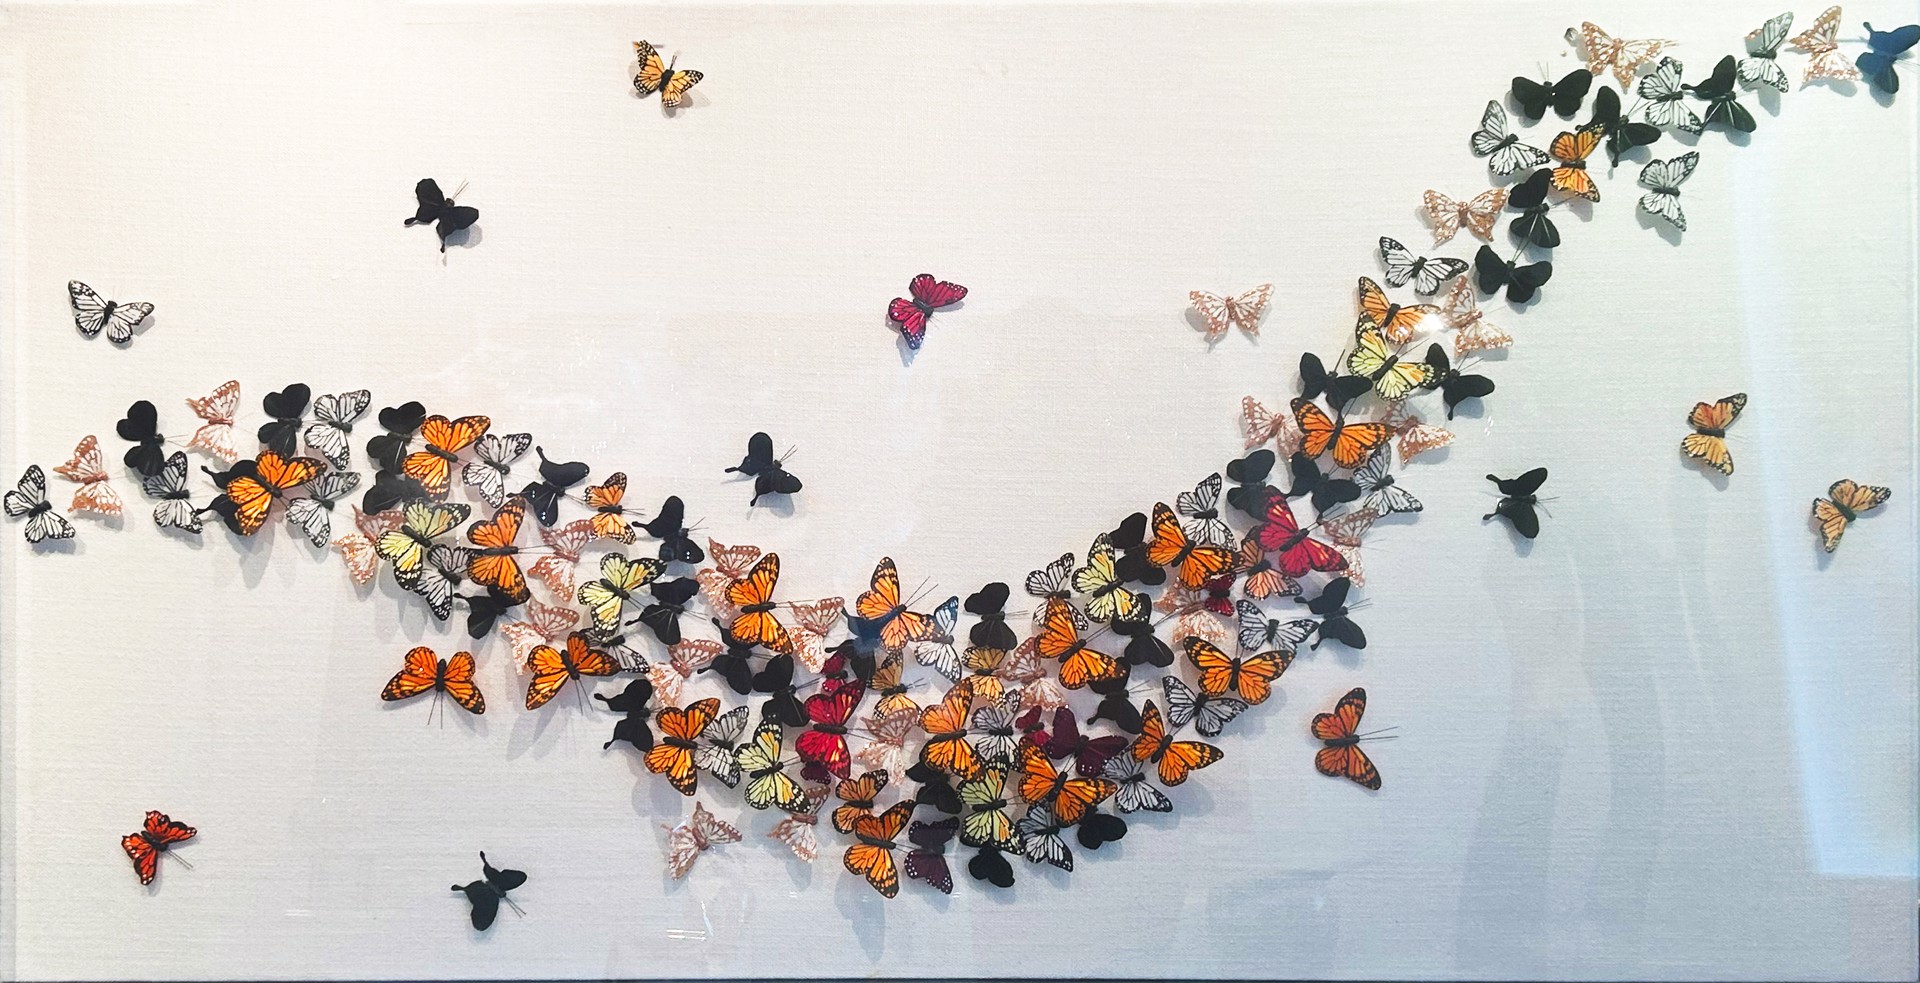 Monarch Migration by Vangelis